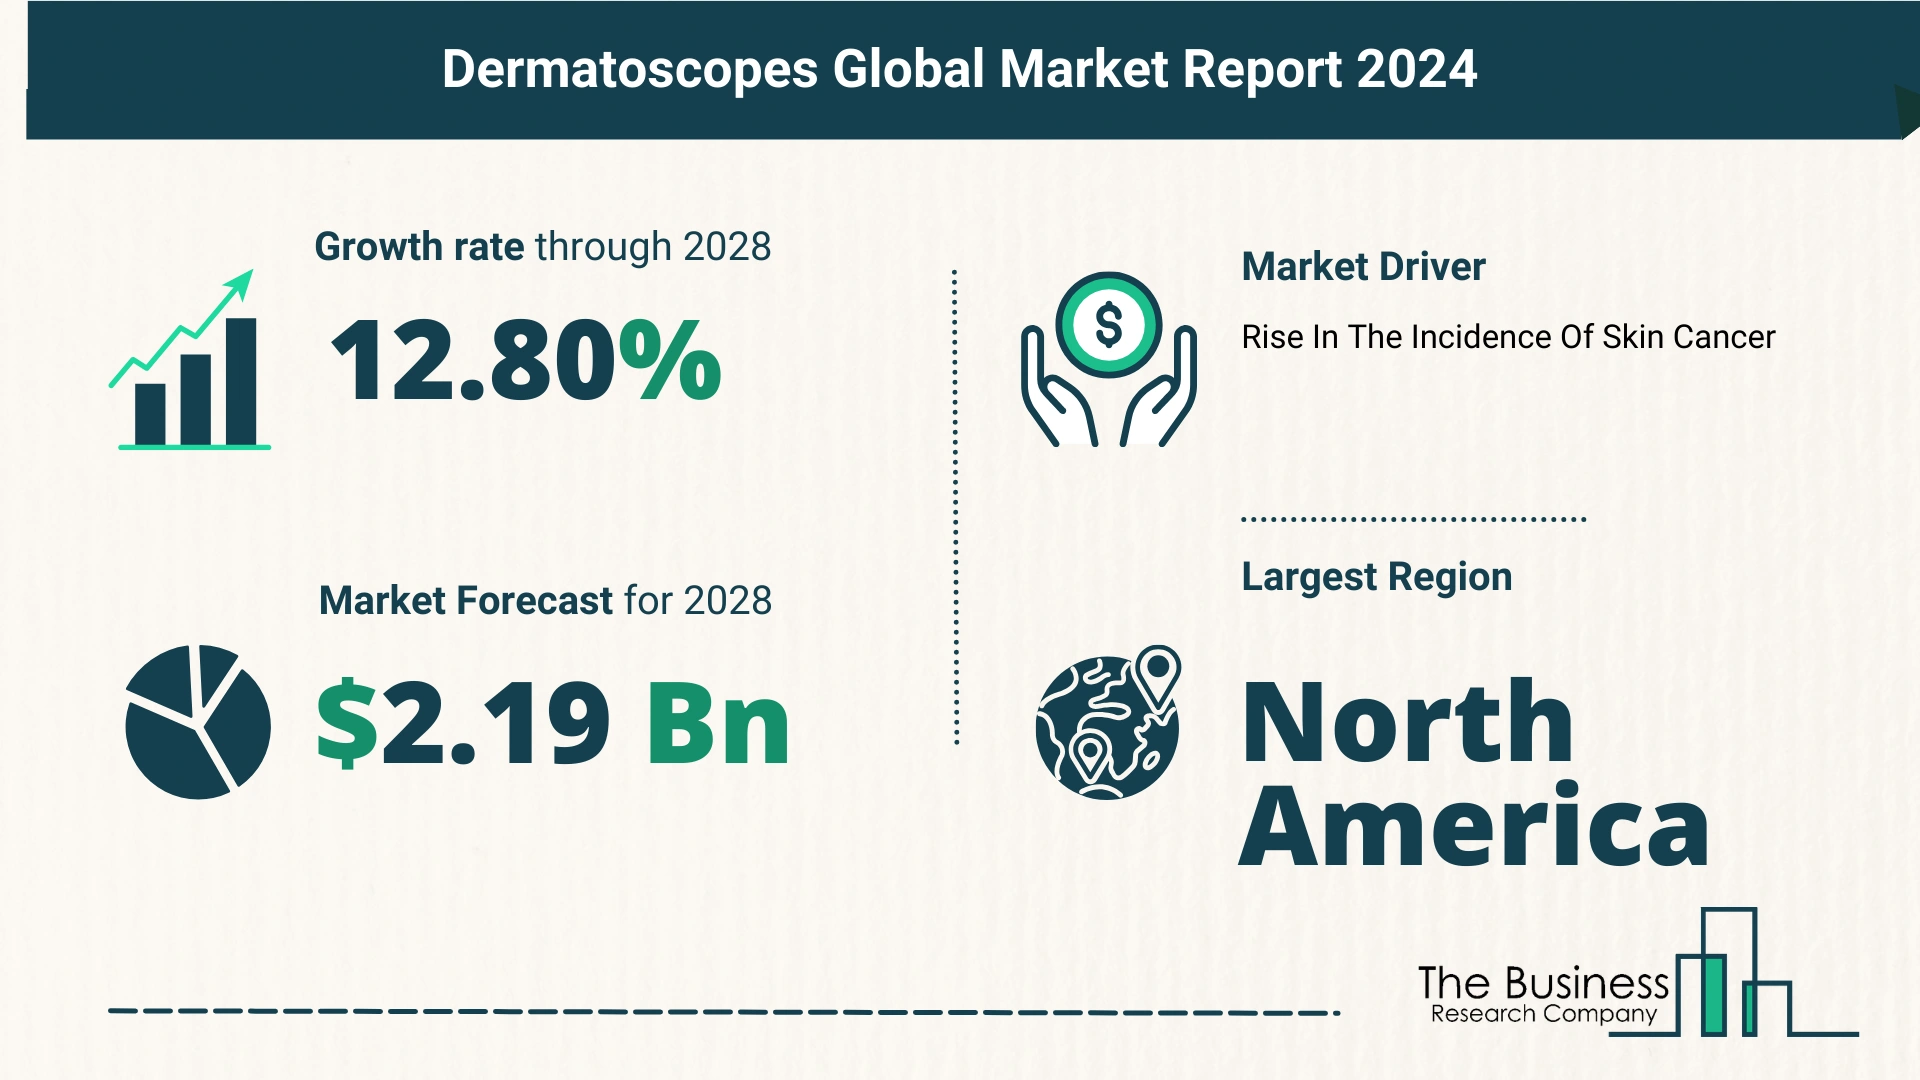 Global Dermatoscopes Market